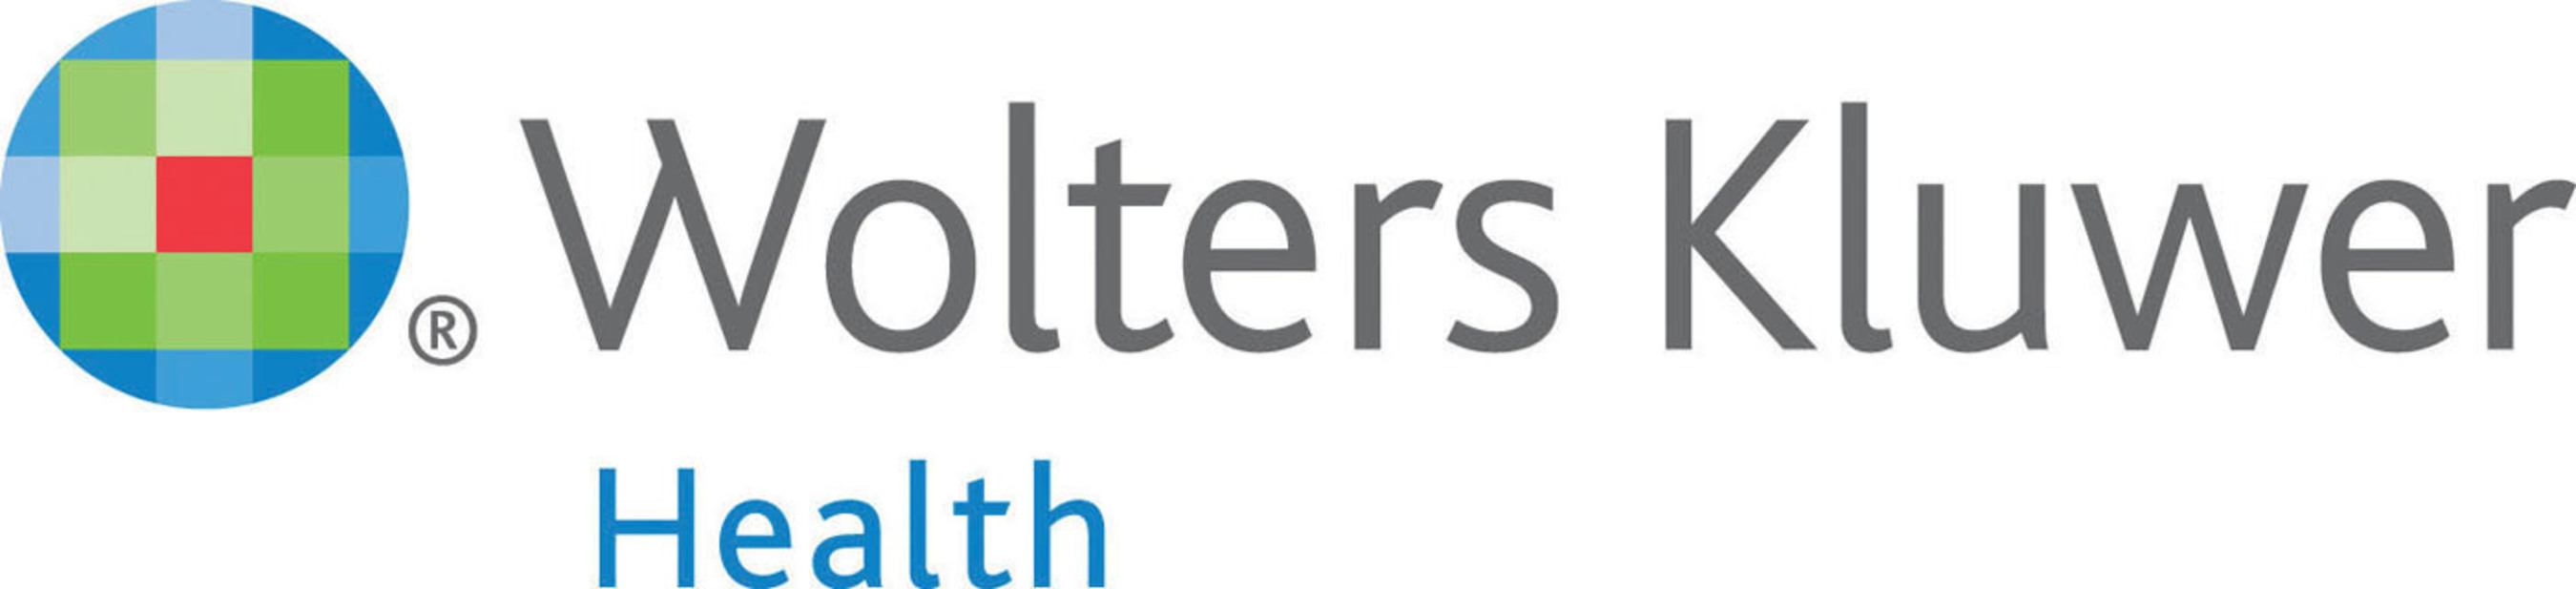 Wolters Kluwer Health. (PRNewsFoto/Wolters Kluwer Health) (PRNewsFoto/)